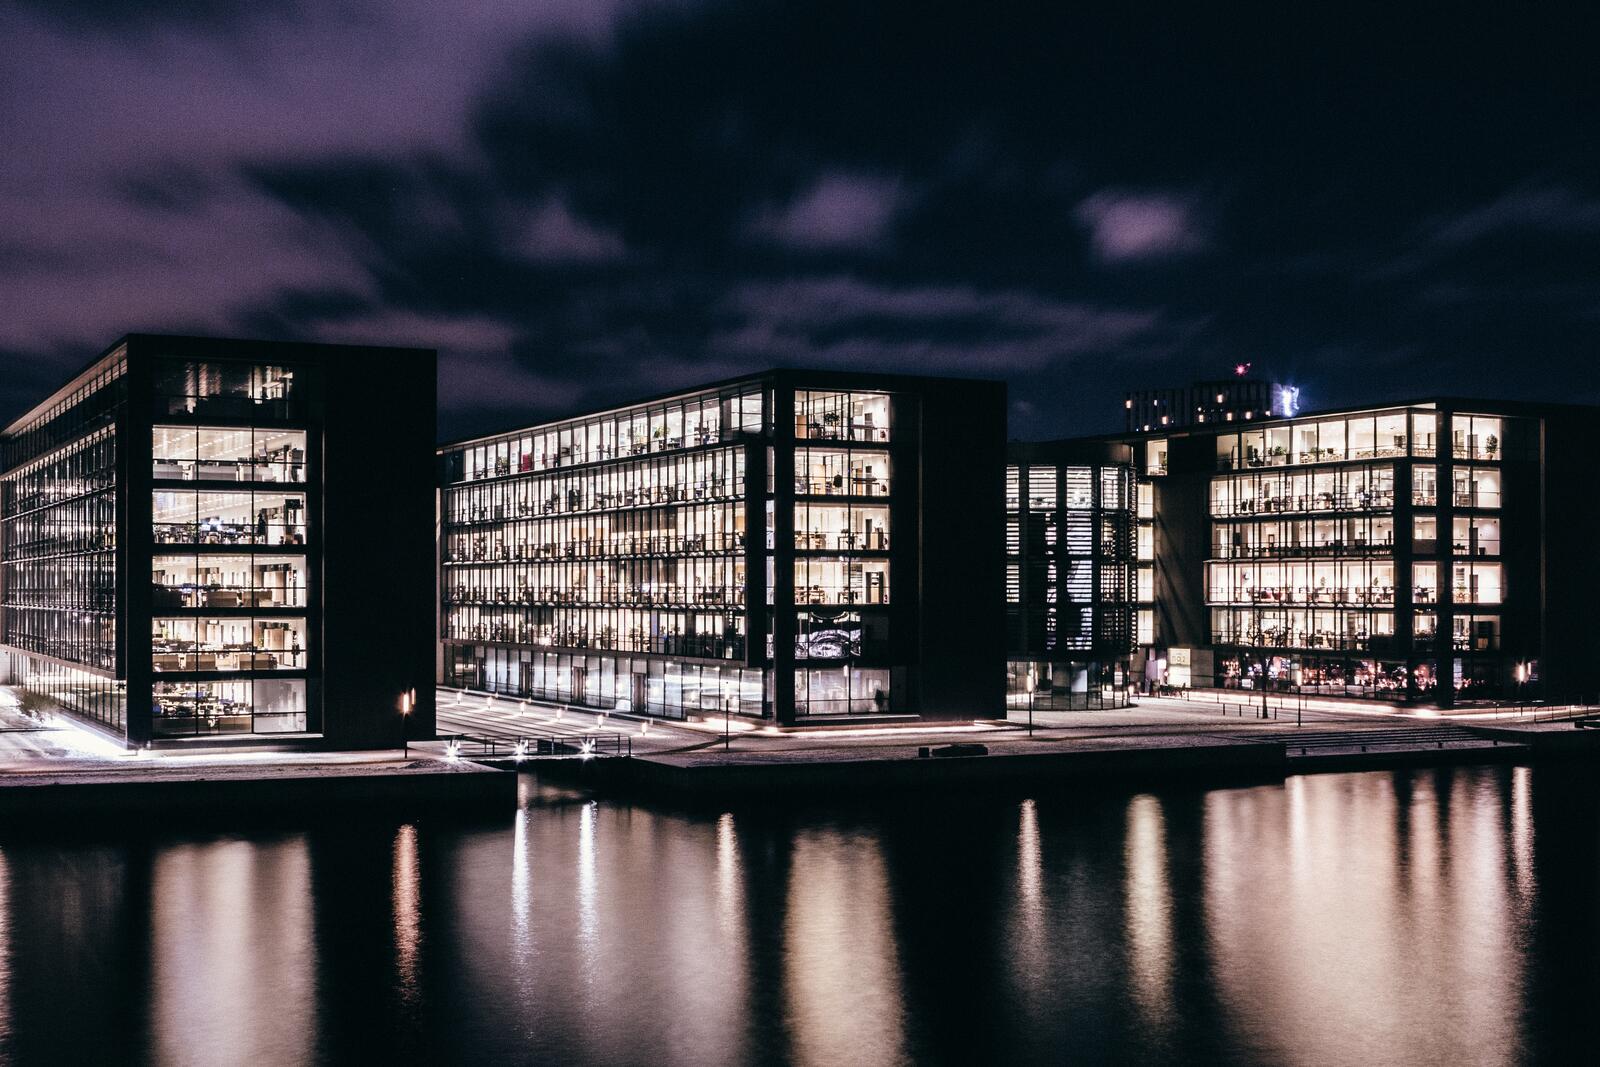 Бесплатное фото Архитектура ночного города возле реки